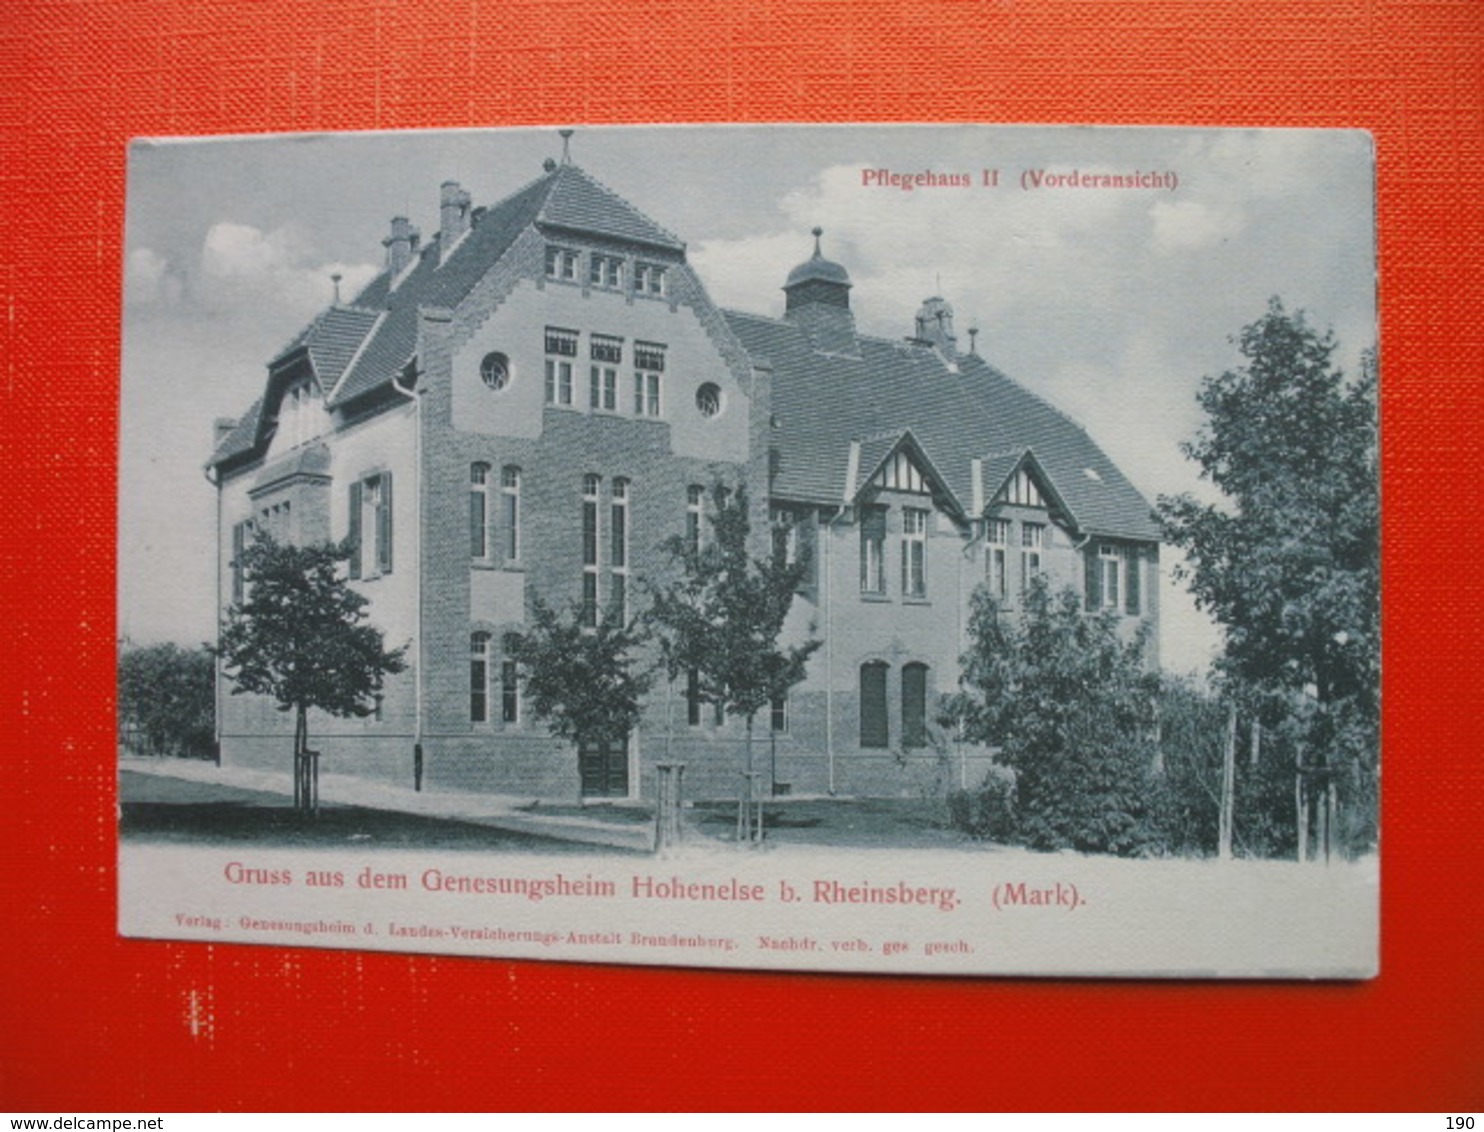 Genesungsheim Hohenelse Bei Rheinsberg(Mark).Pflegehaus II - Rheinsberg